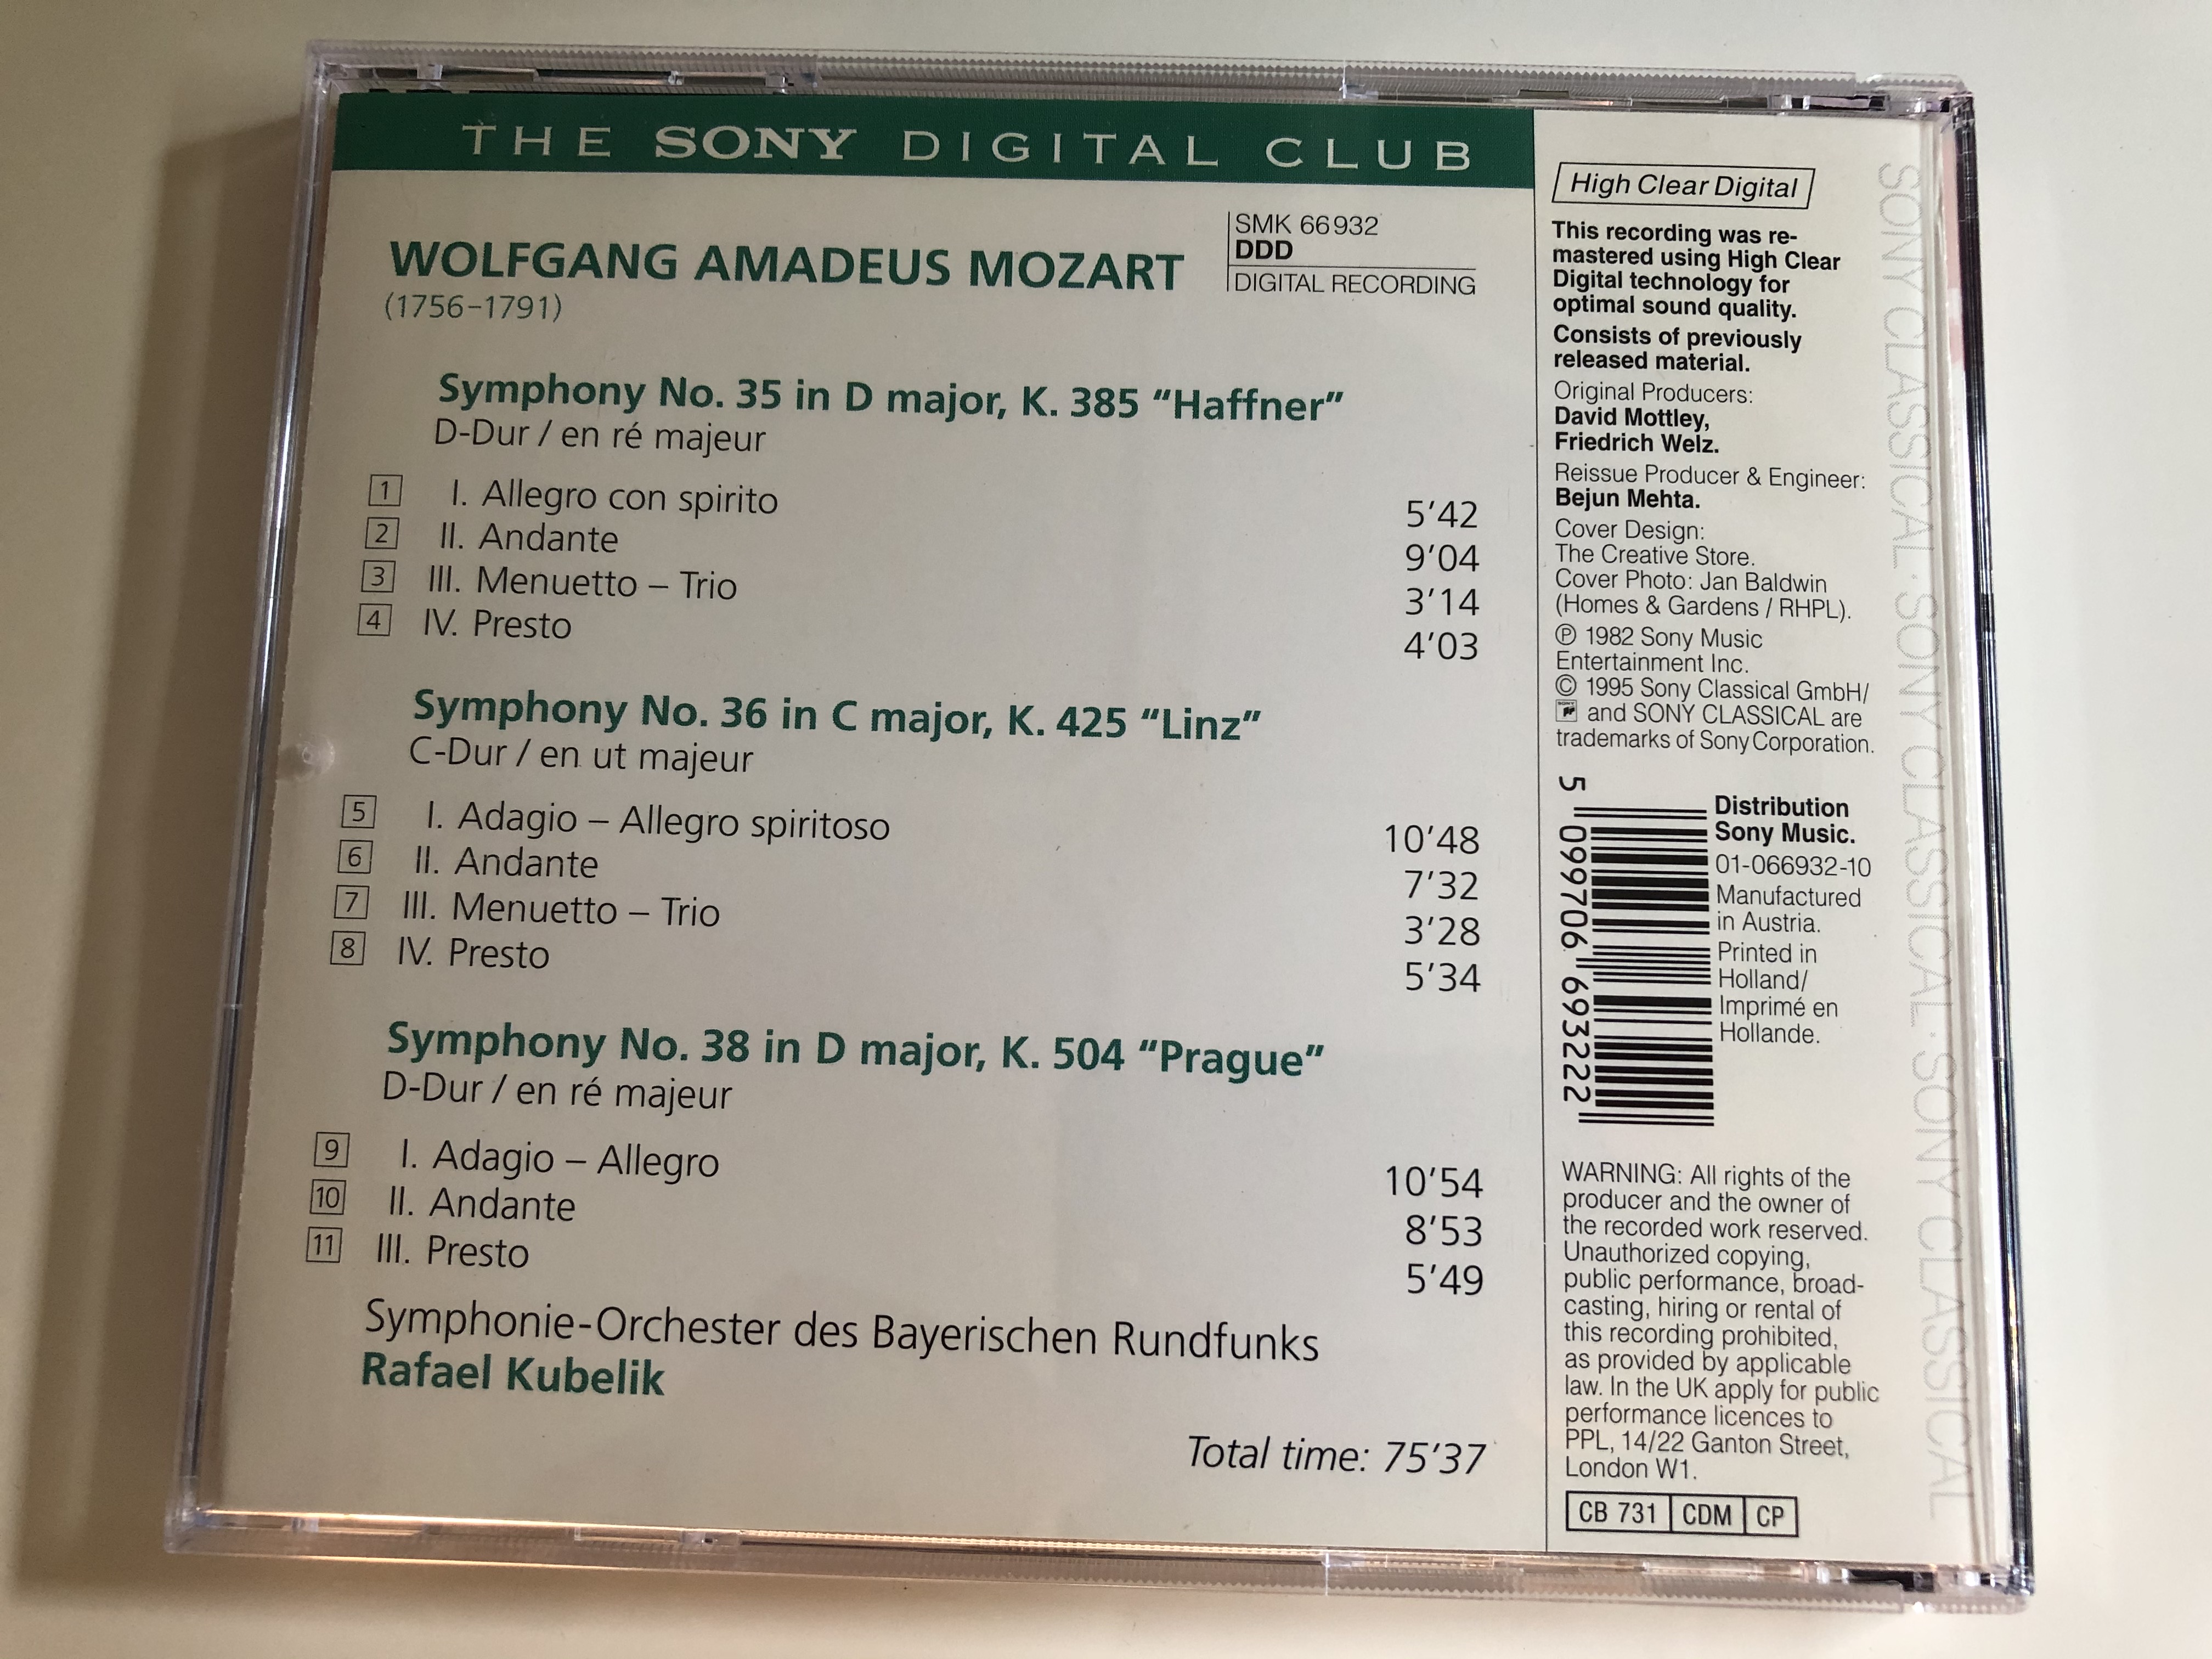 mozart-symphony-no.-35-haffner-symphony-no.-36-linz-symphony-no.-38-prague-symphonie-orchester-des-bayerischen-rundfunks-rafael-kubelik-sony-music-audio-cd-1982-smk-66932-9-.jpg